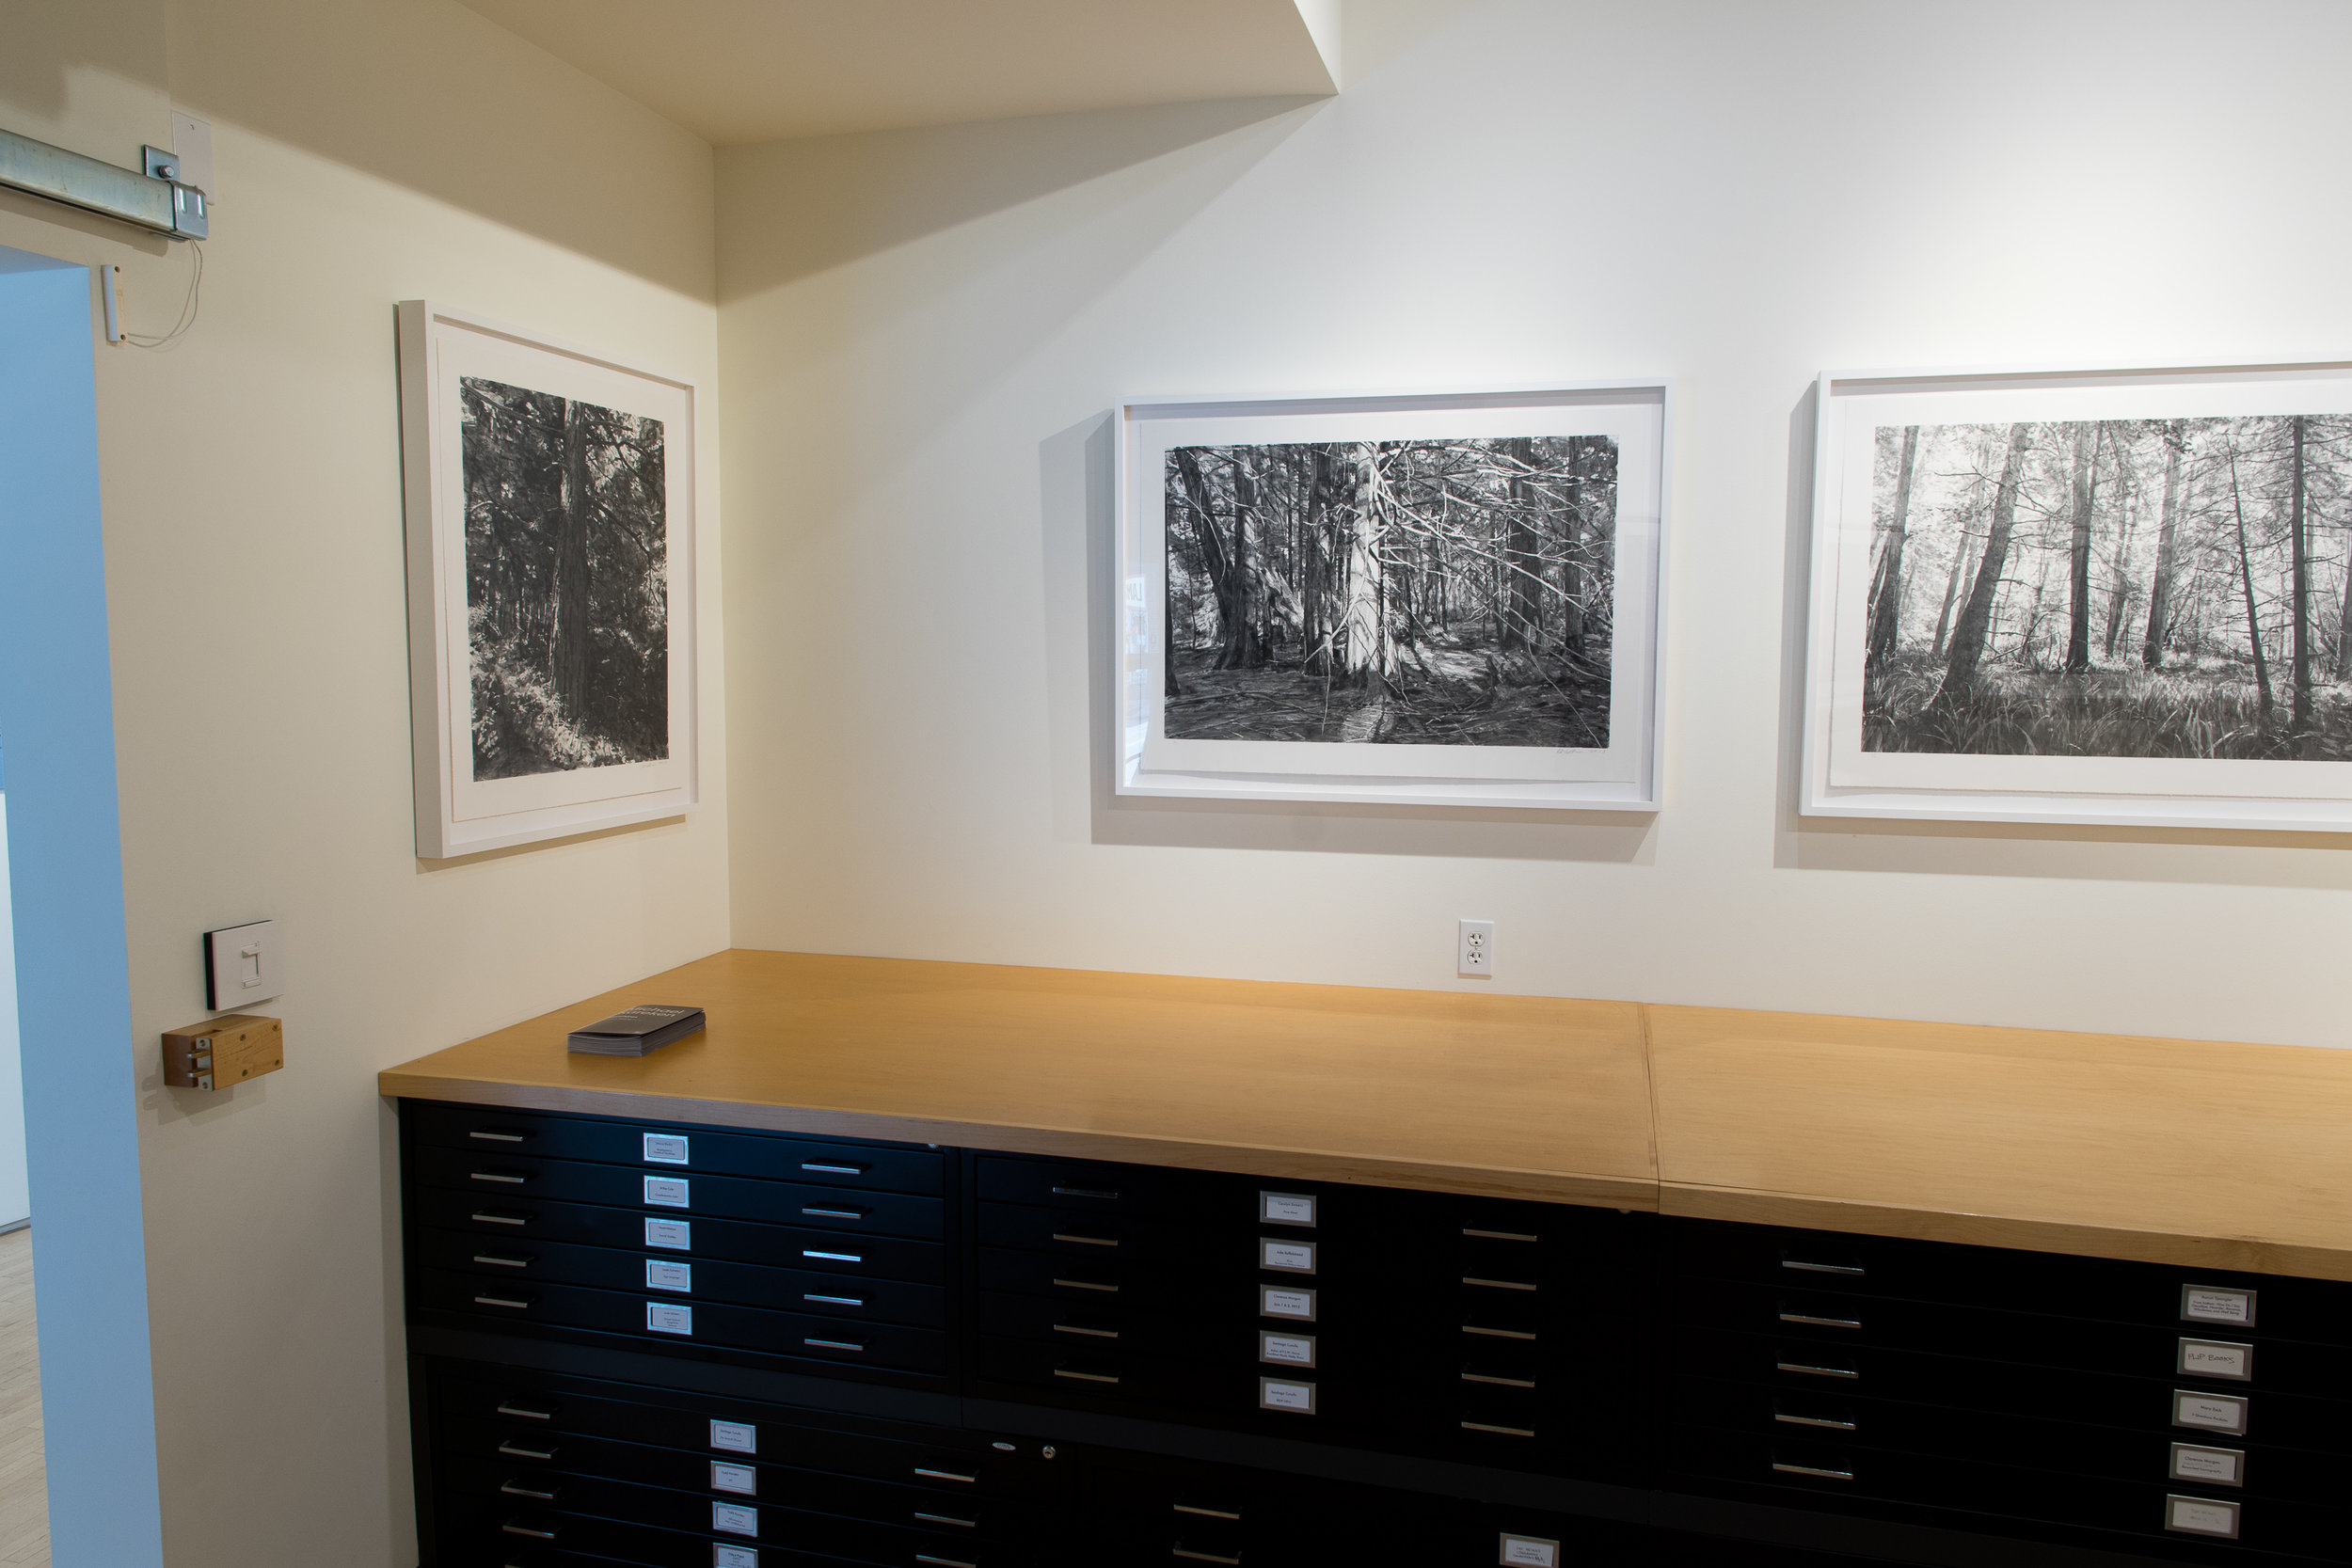  Highpoint Printmaking
Print Room with Michael Kareken Prints


180927a0151.JPG 